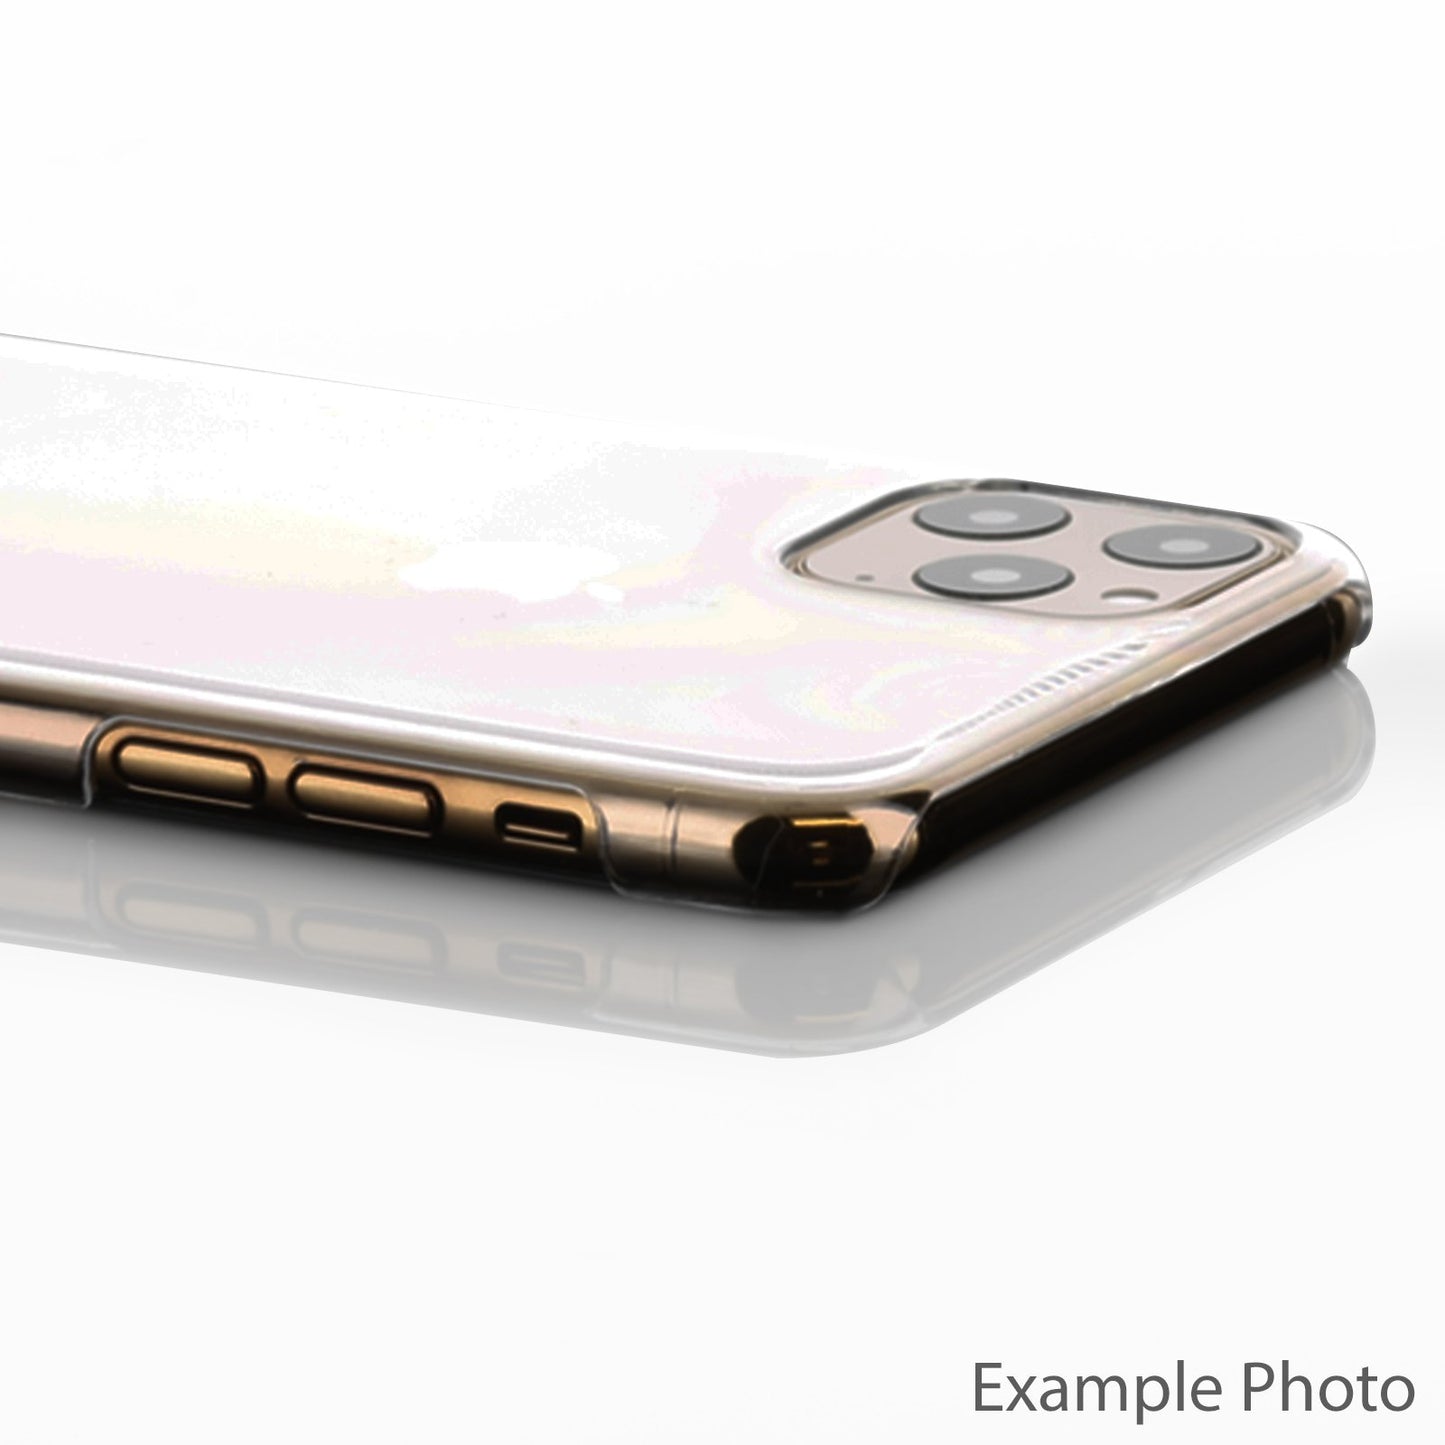 Personalised Apple iPhone Hard Case - Pink Marble Fade & Monogram